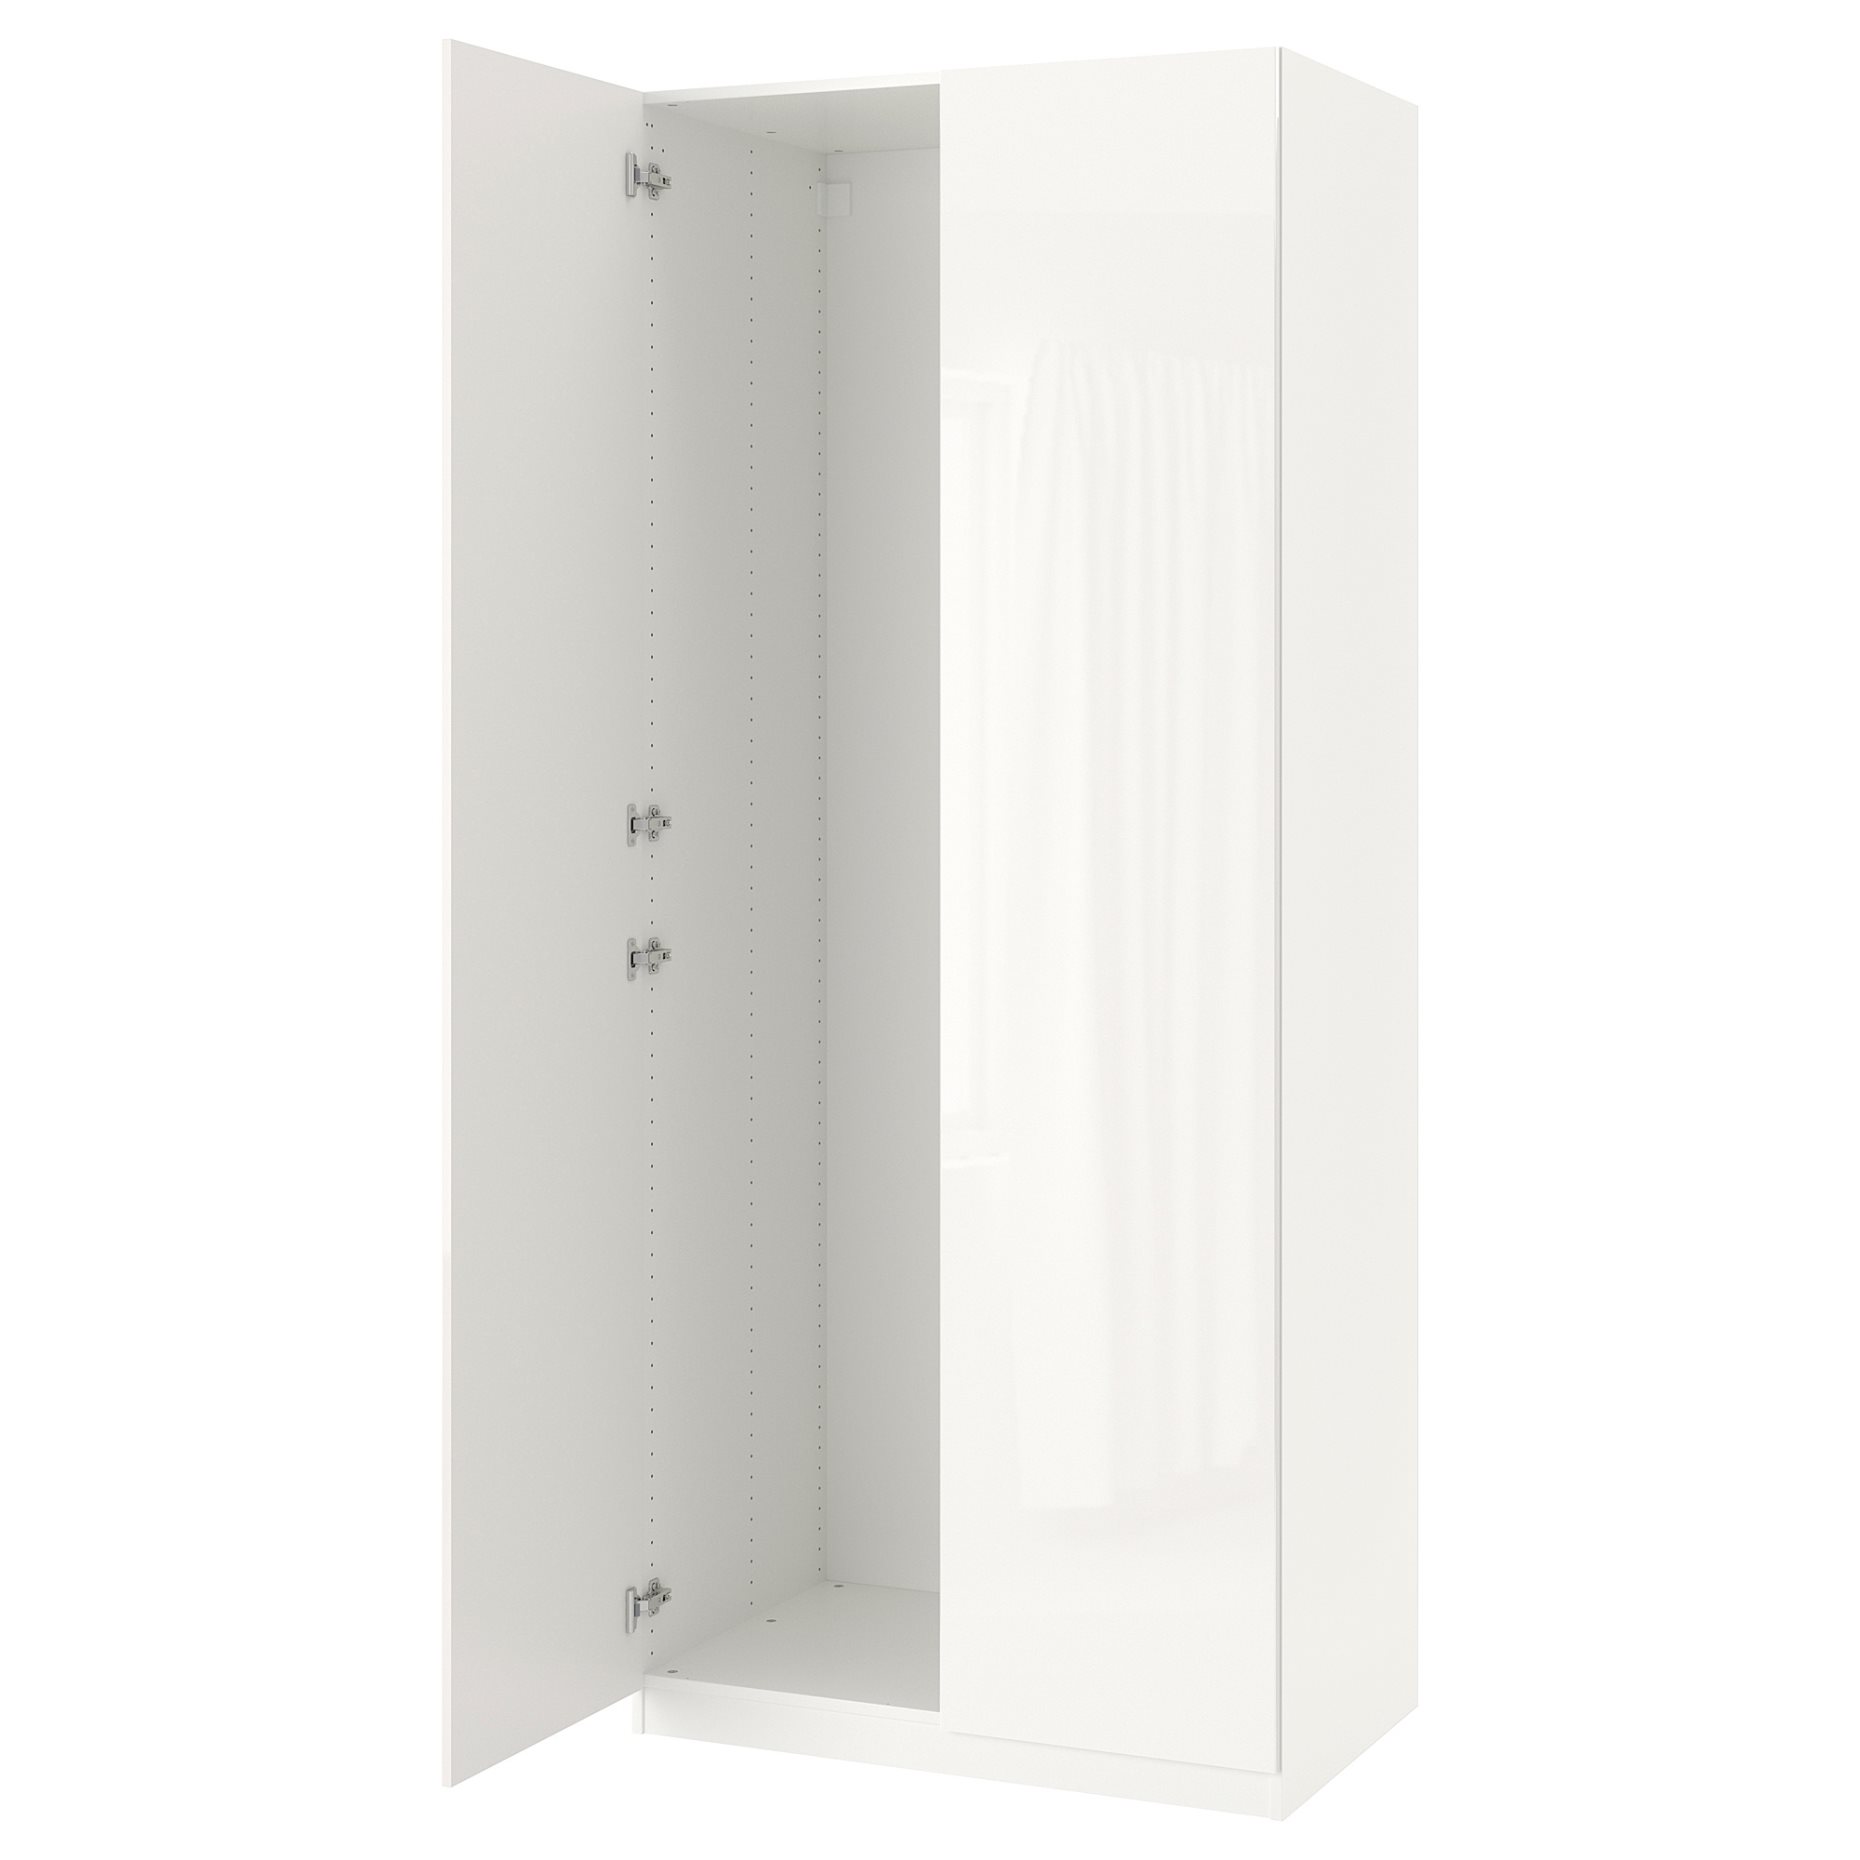 PAX, ντουλάπα με 2 πόρτες, 100X60X236 cm, 399.054.98